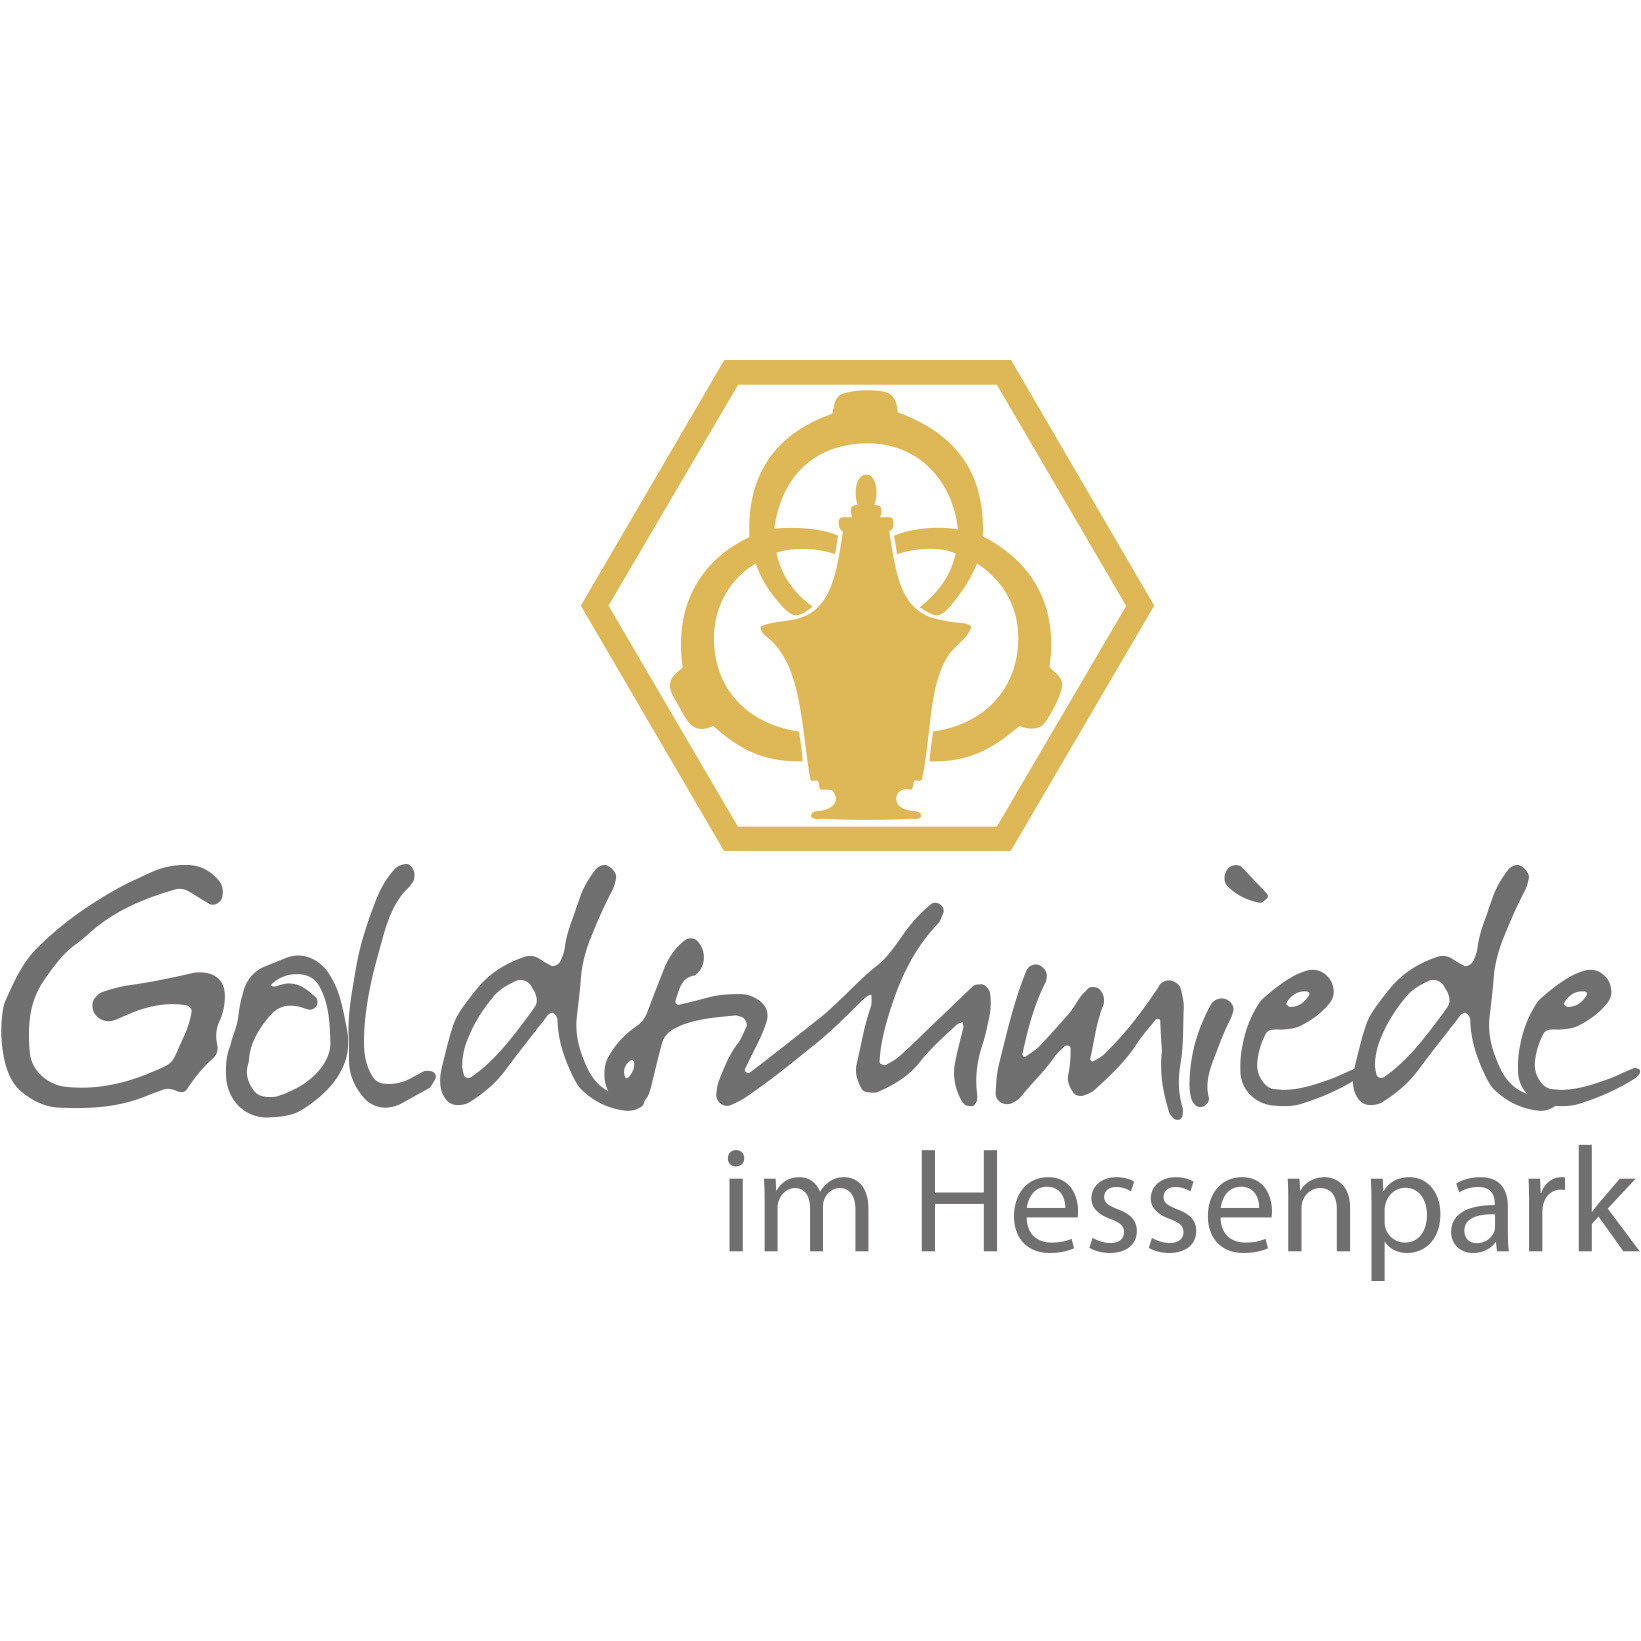 Goldschmiede im Hessenpark in Neu Anspach - Logo